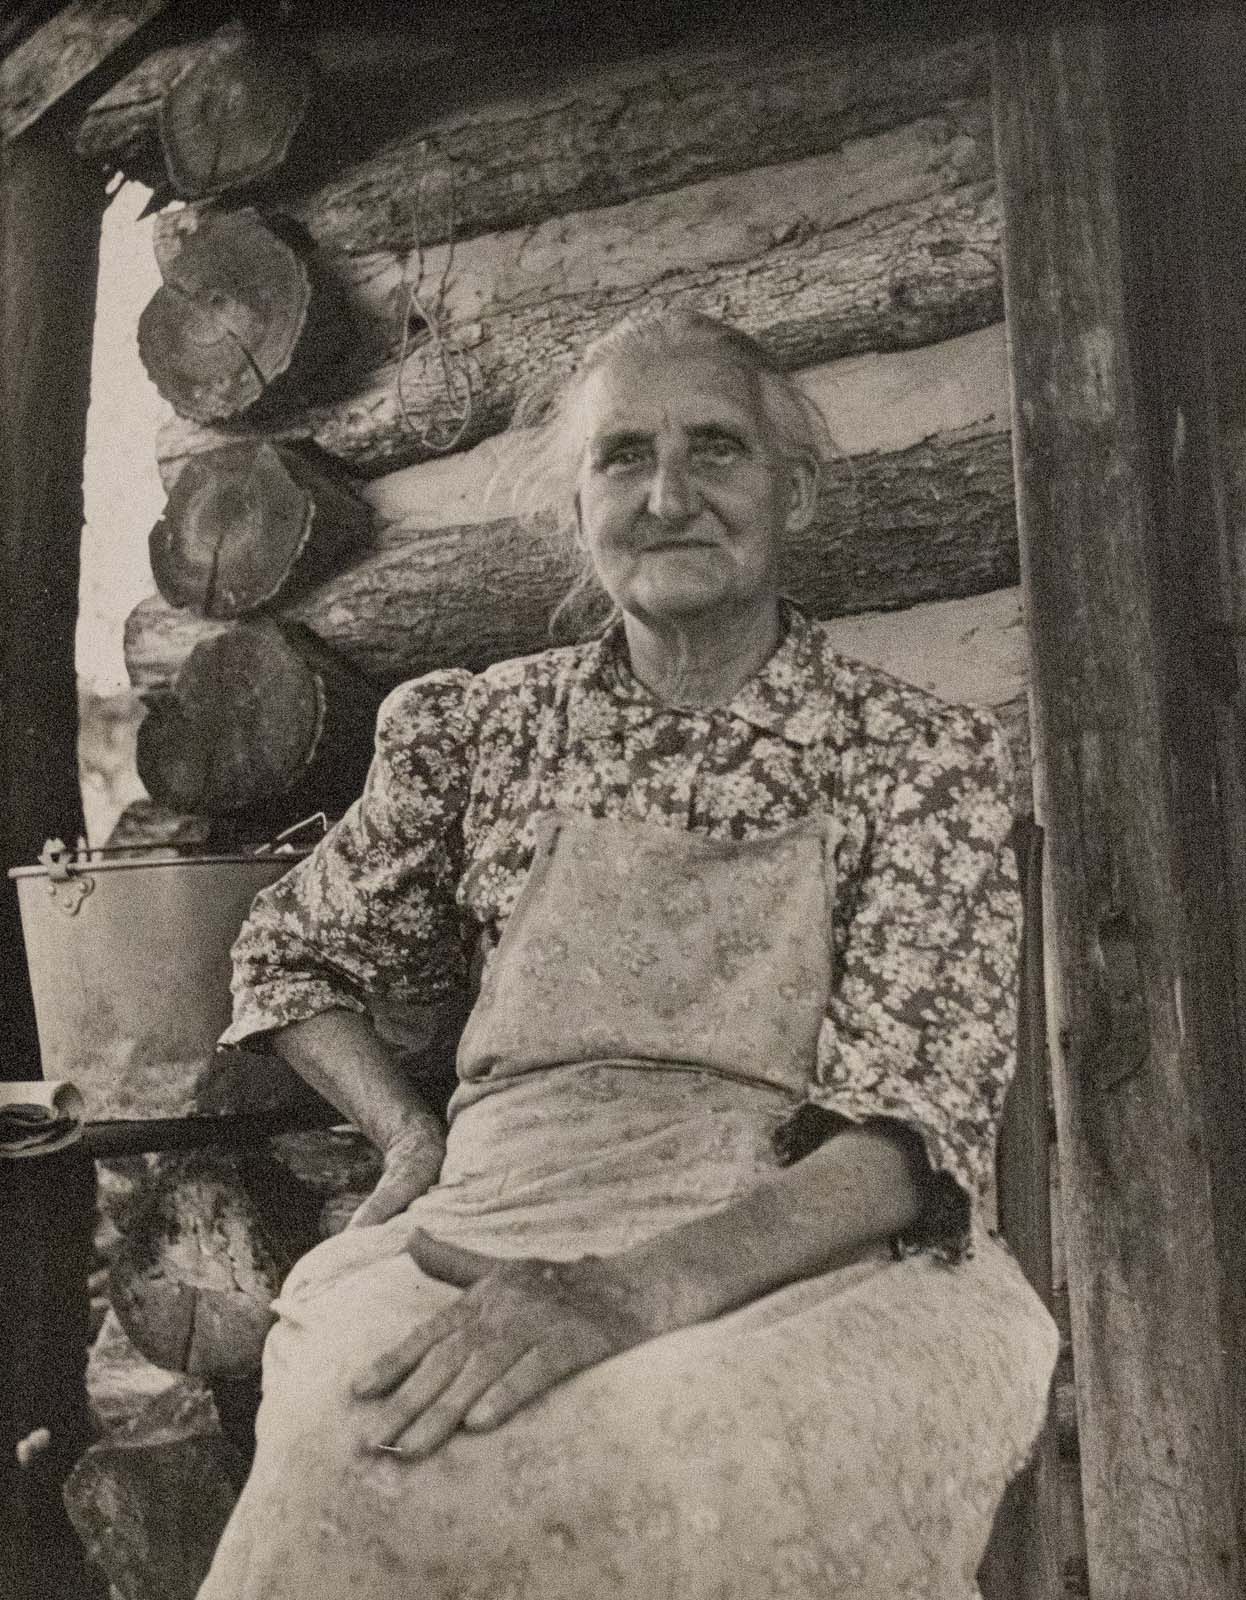 Mrs. J.N. Stufflebeam portrait on a log cabin porch